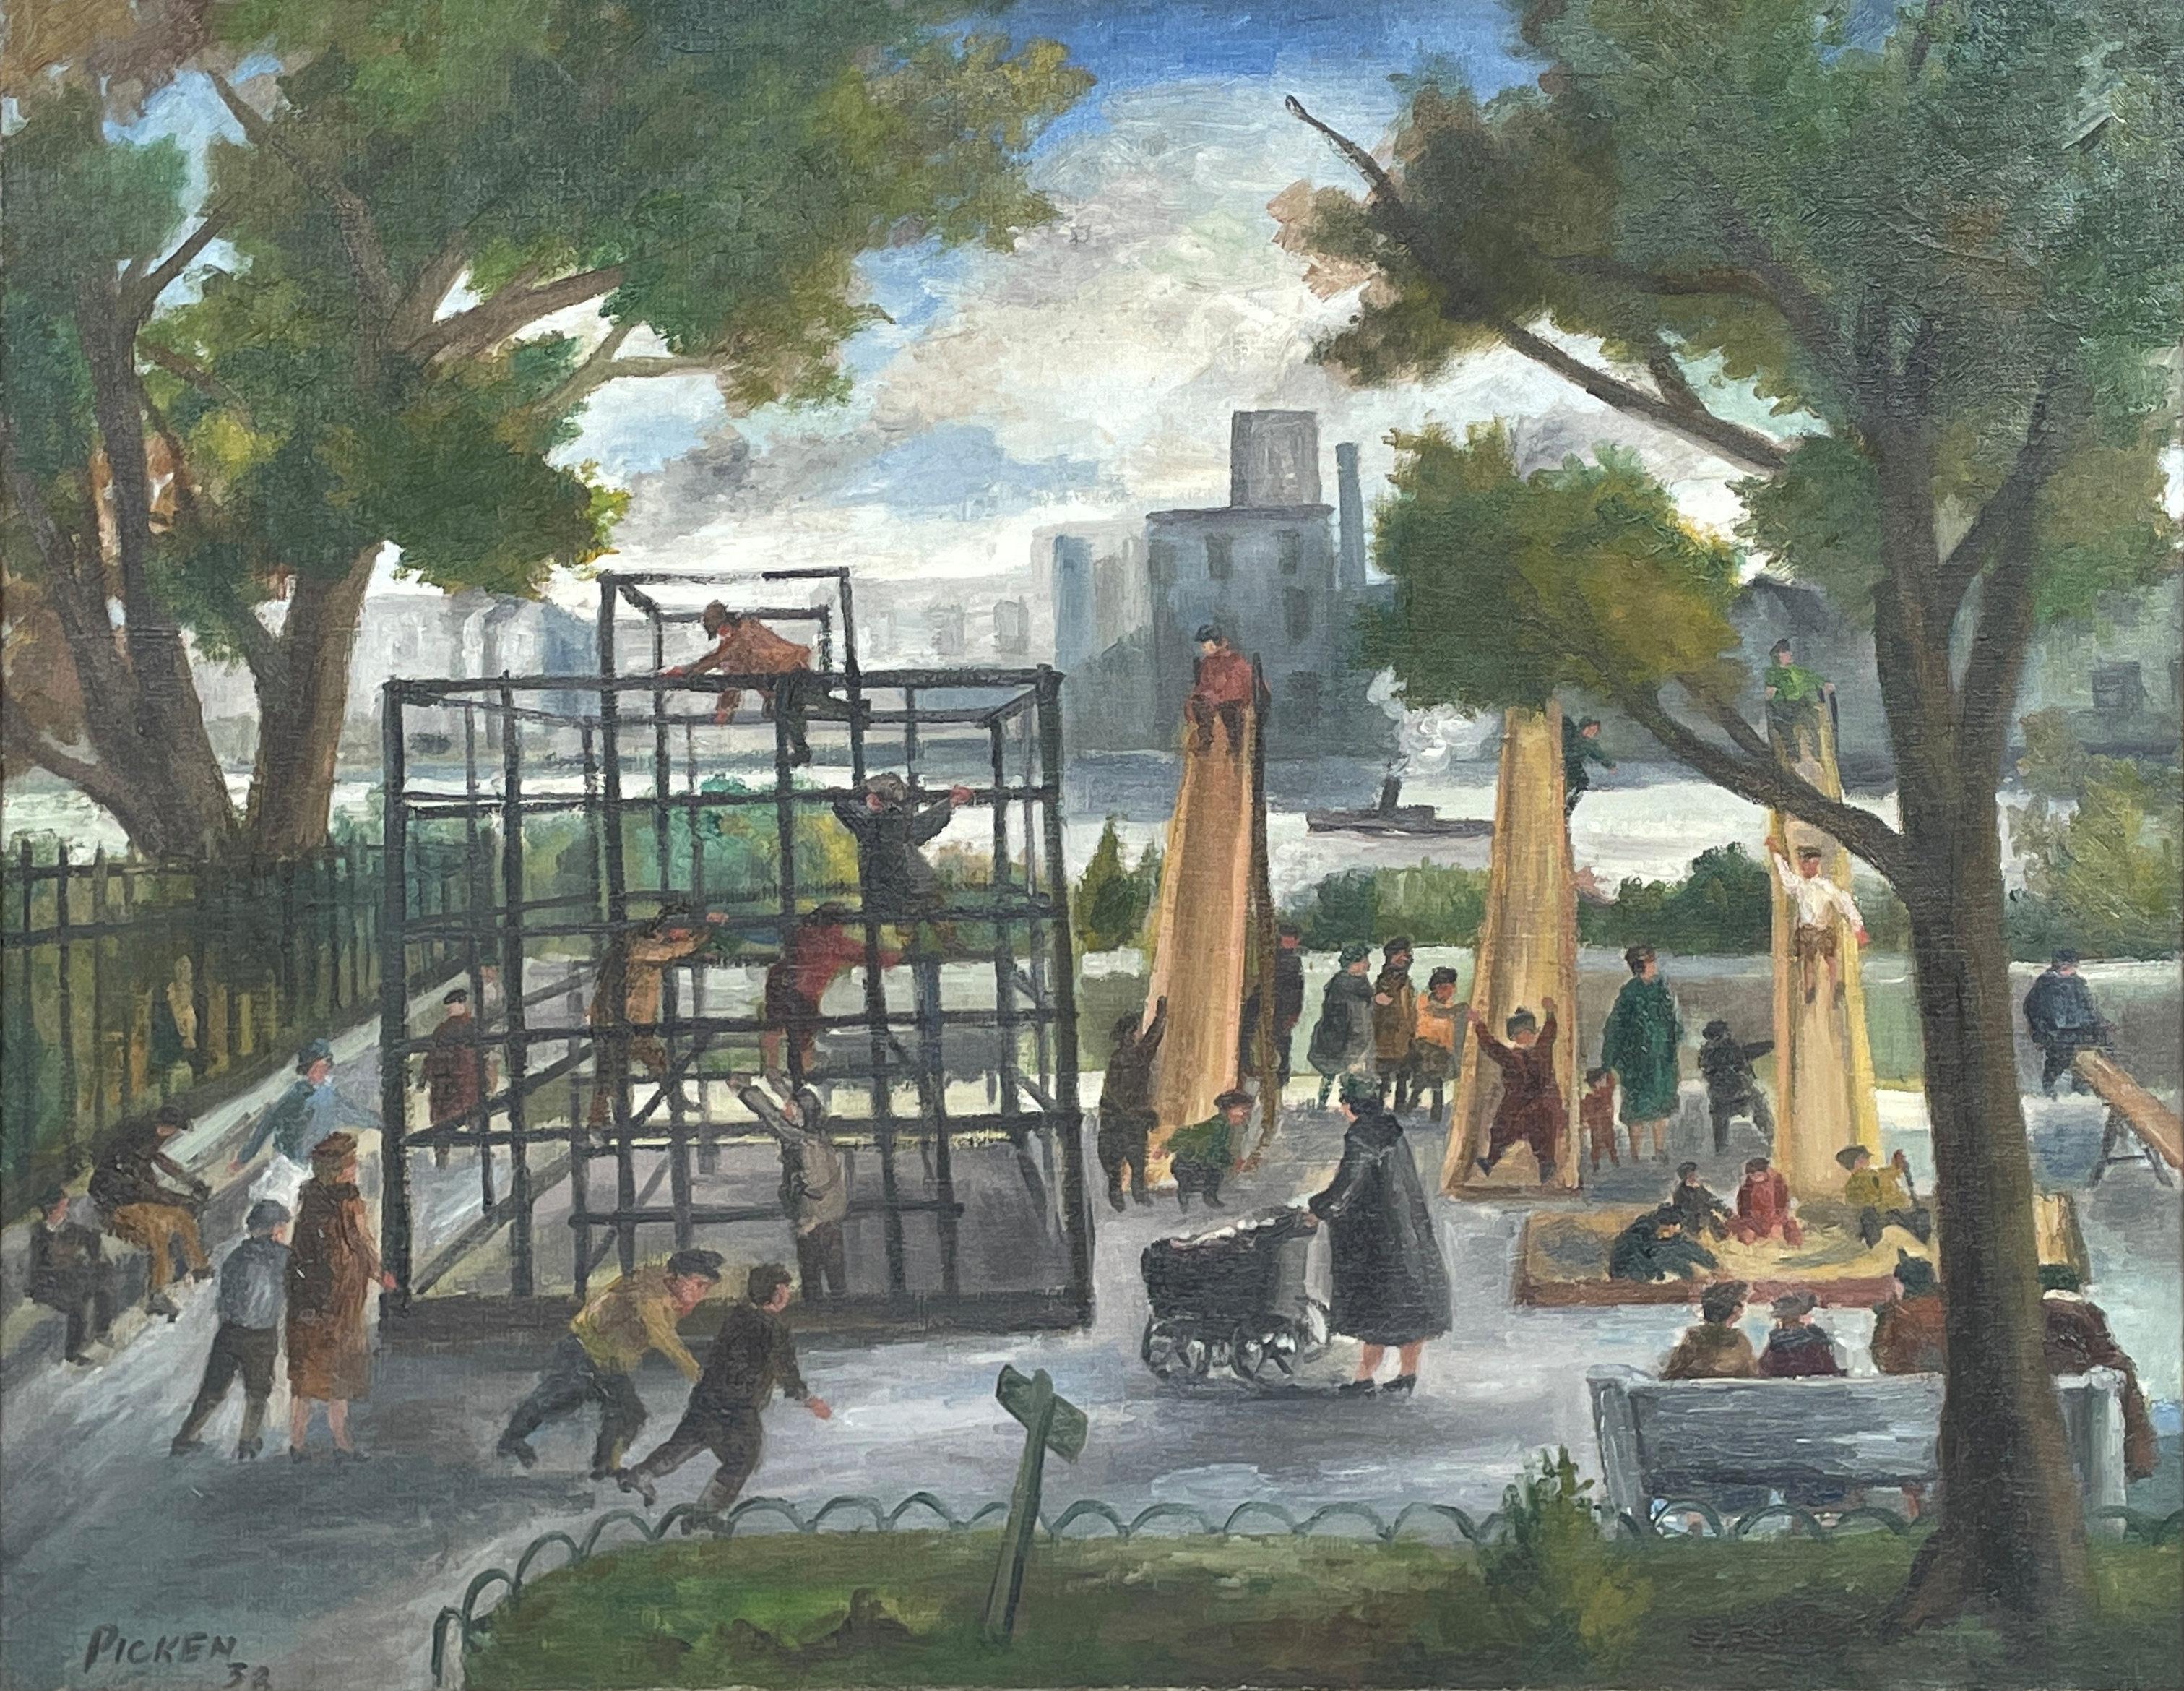 "Playground, Carl Schurz Park" George Picken, New York City, East River, UES WPA